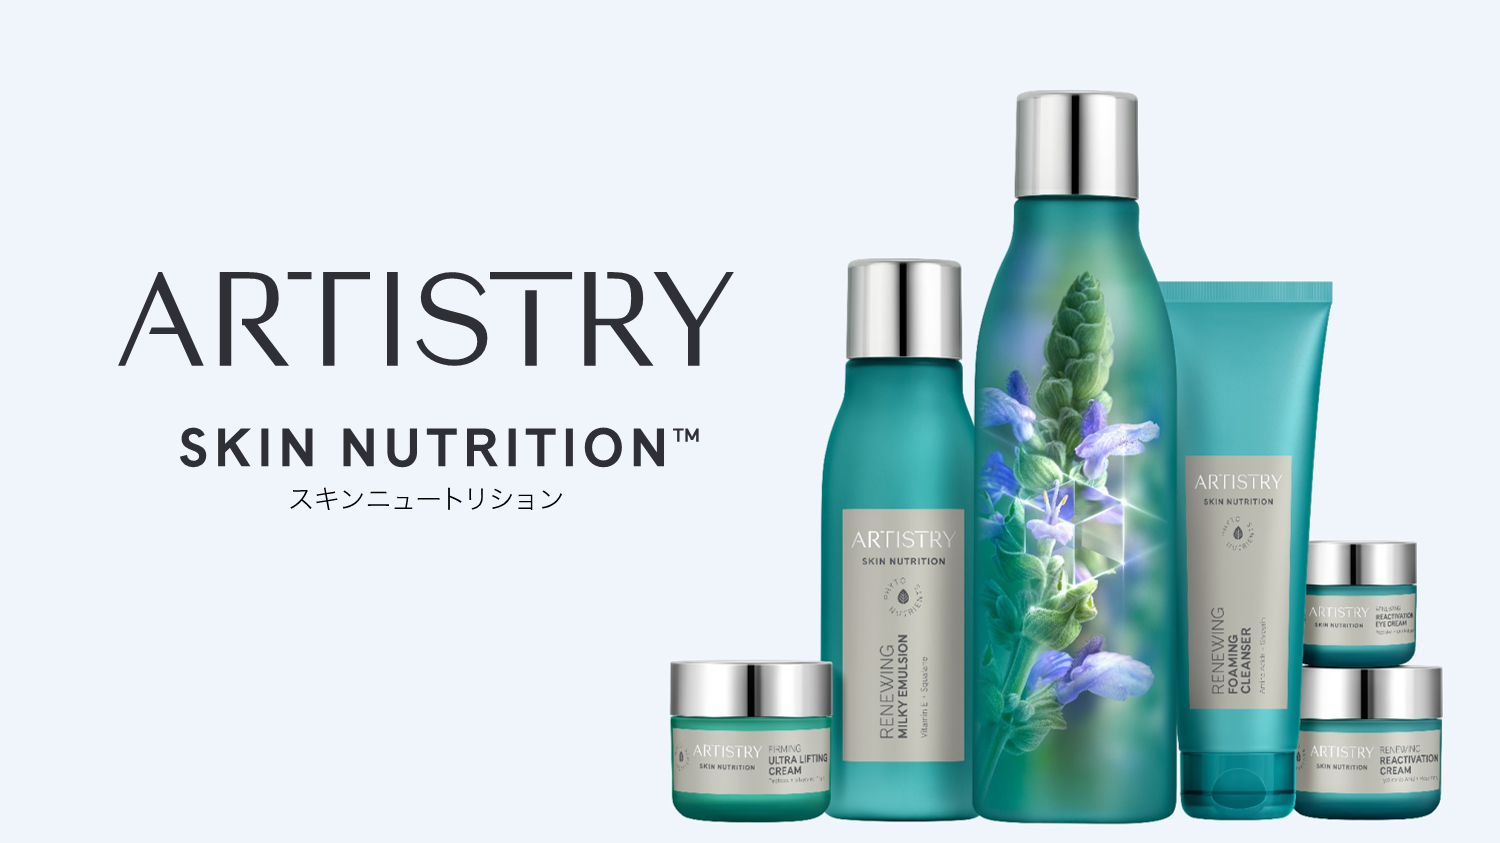 ARTISTRY(TM)が刷新 植物の生命力で美肌を科学する 新ブランド 